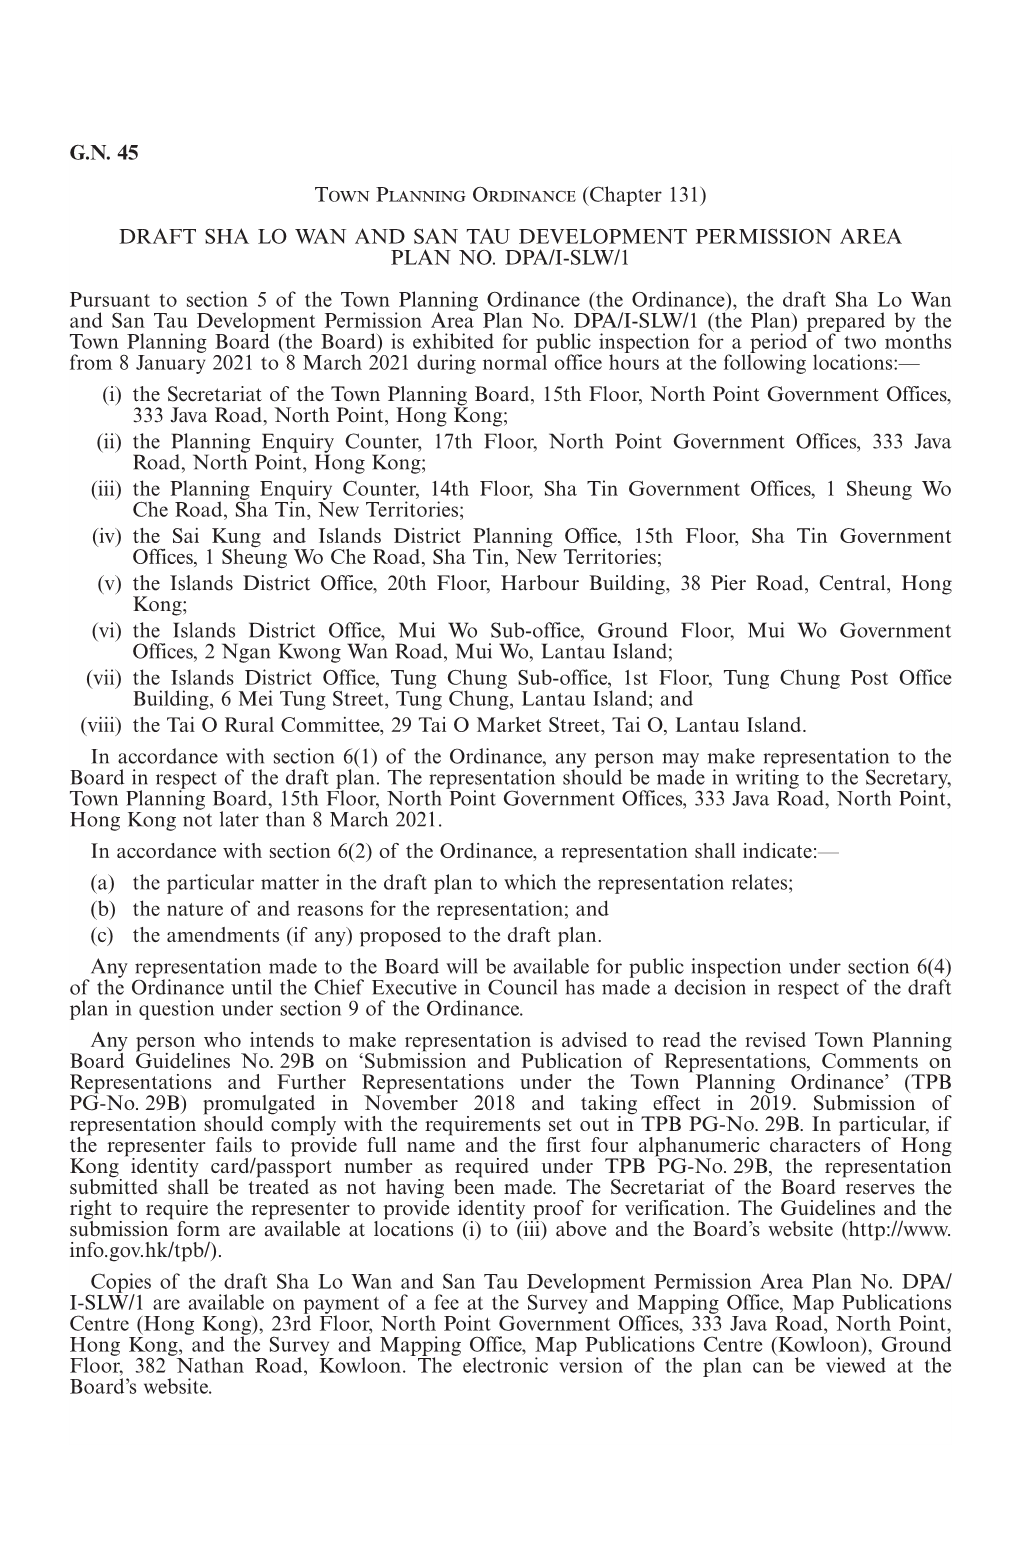 G.N. 45 Town Planning Ordinance (Chapter 131) DRAFT SHA LO WAN and SAN TAU DEVELOPMENT PERMISSION AREA PLAN NO